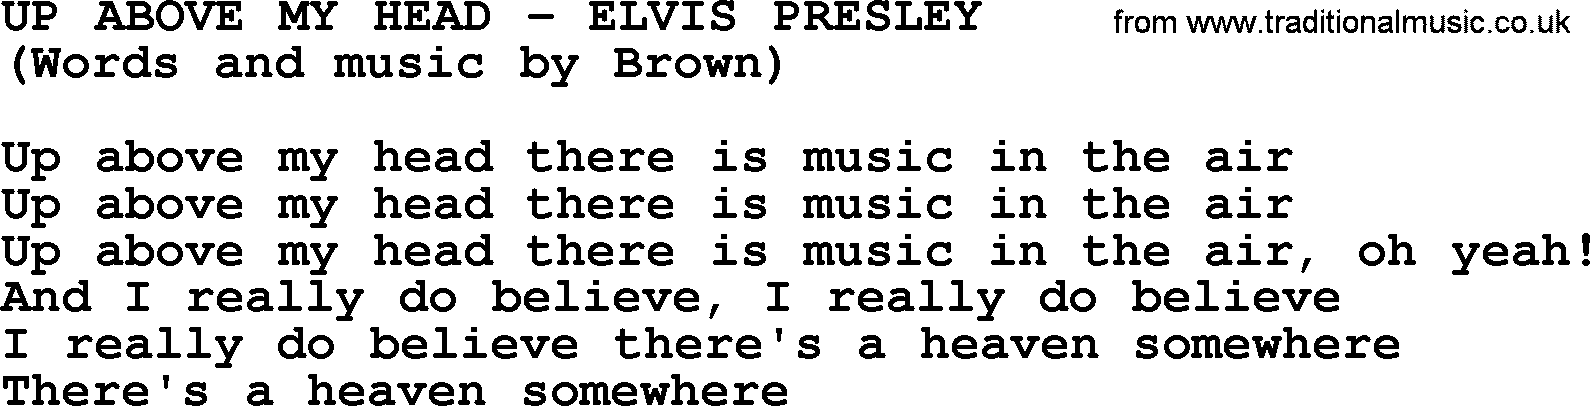 Elvis Presley song: Up Above My Head lyrics